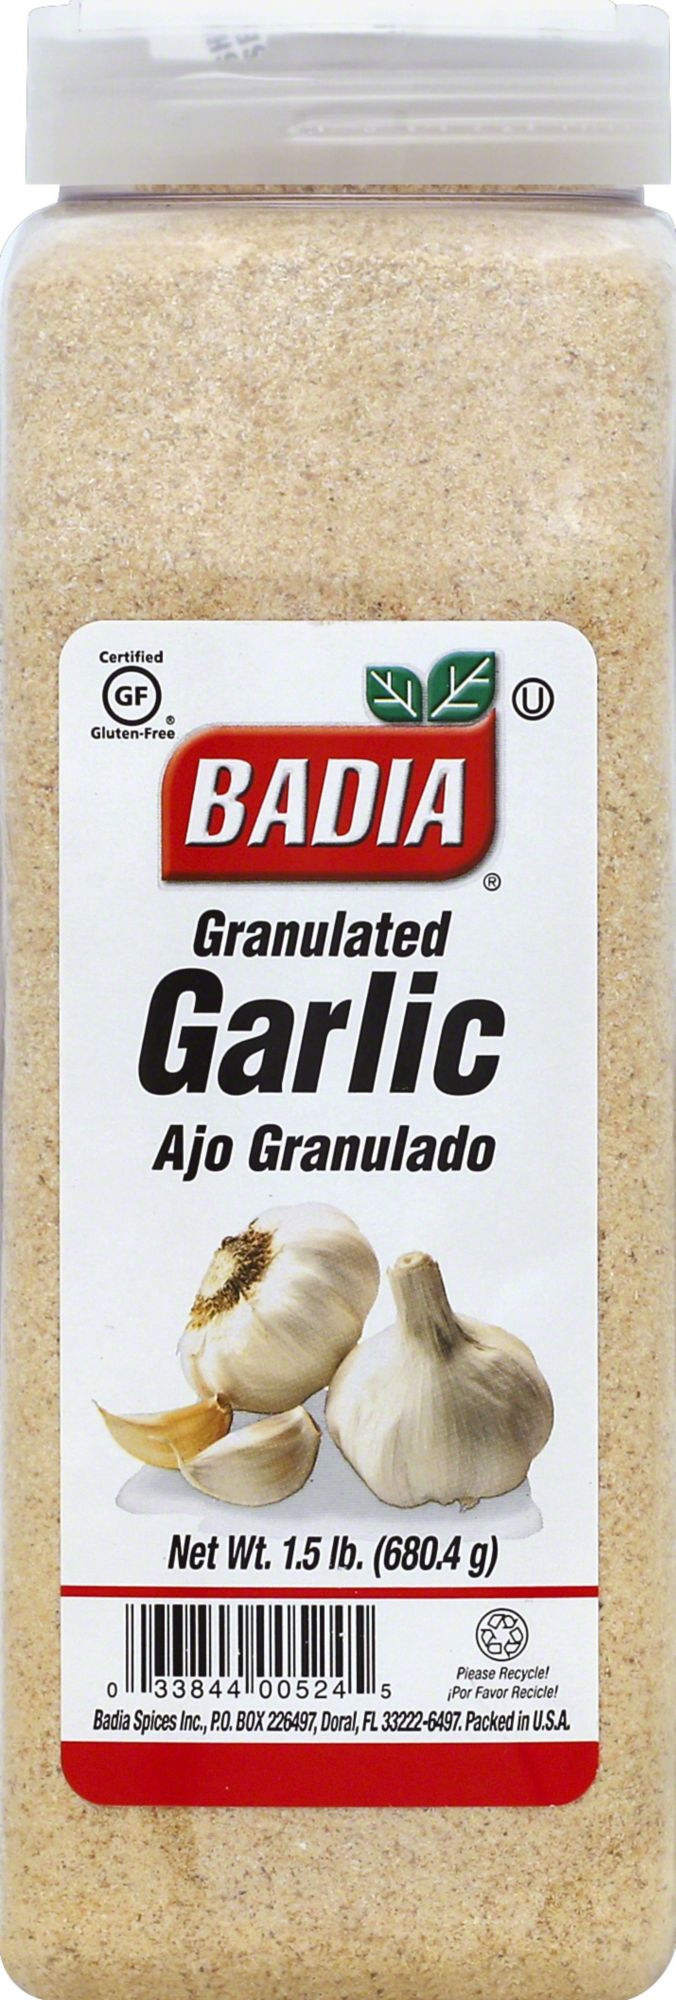 Badia Complete Seasoning, 96 Oz 6 Pound (Pack of 1)